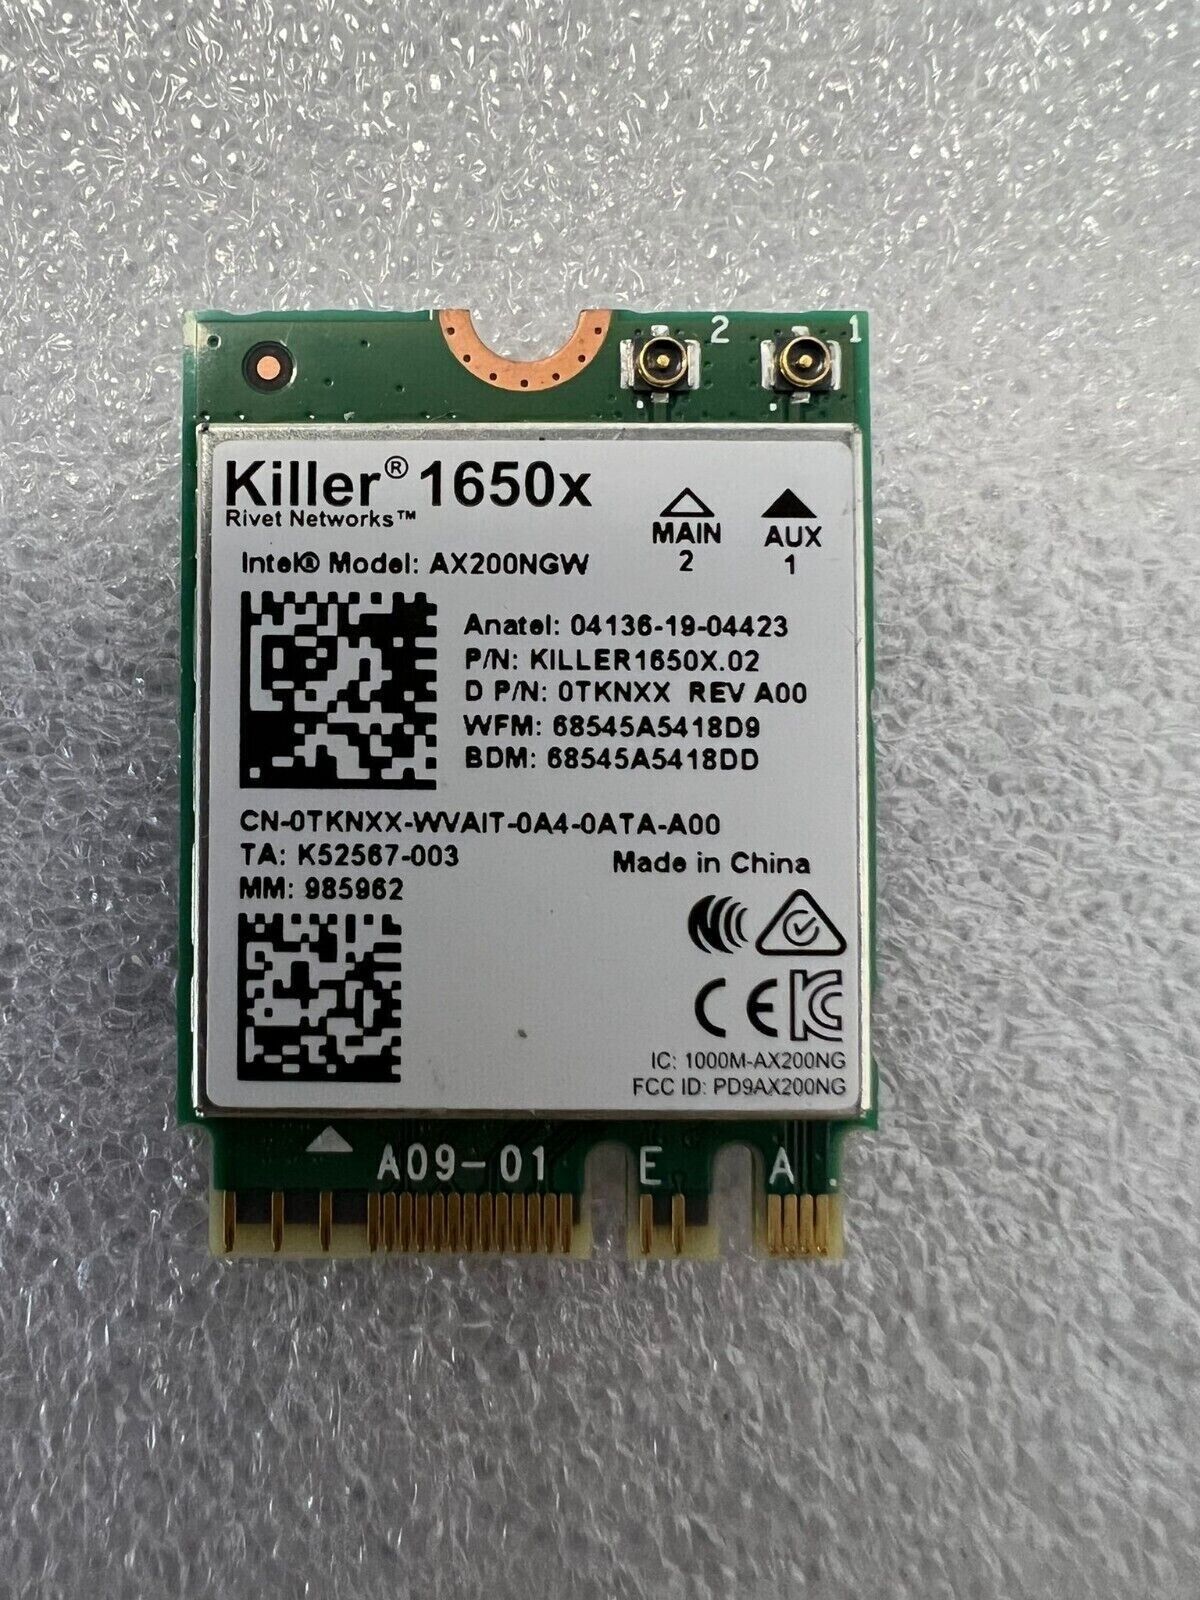 INTEL AX200NGW WI-FI 6 AX200 Killer 1650x PCI-E M.2 2230 WLAN BT 5.2 WIFI TKNXX